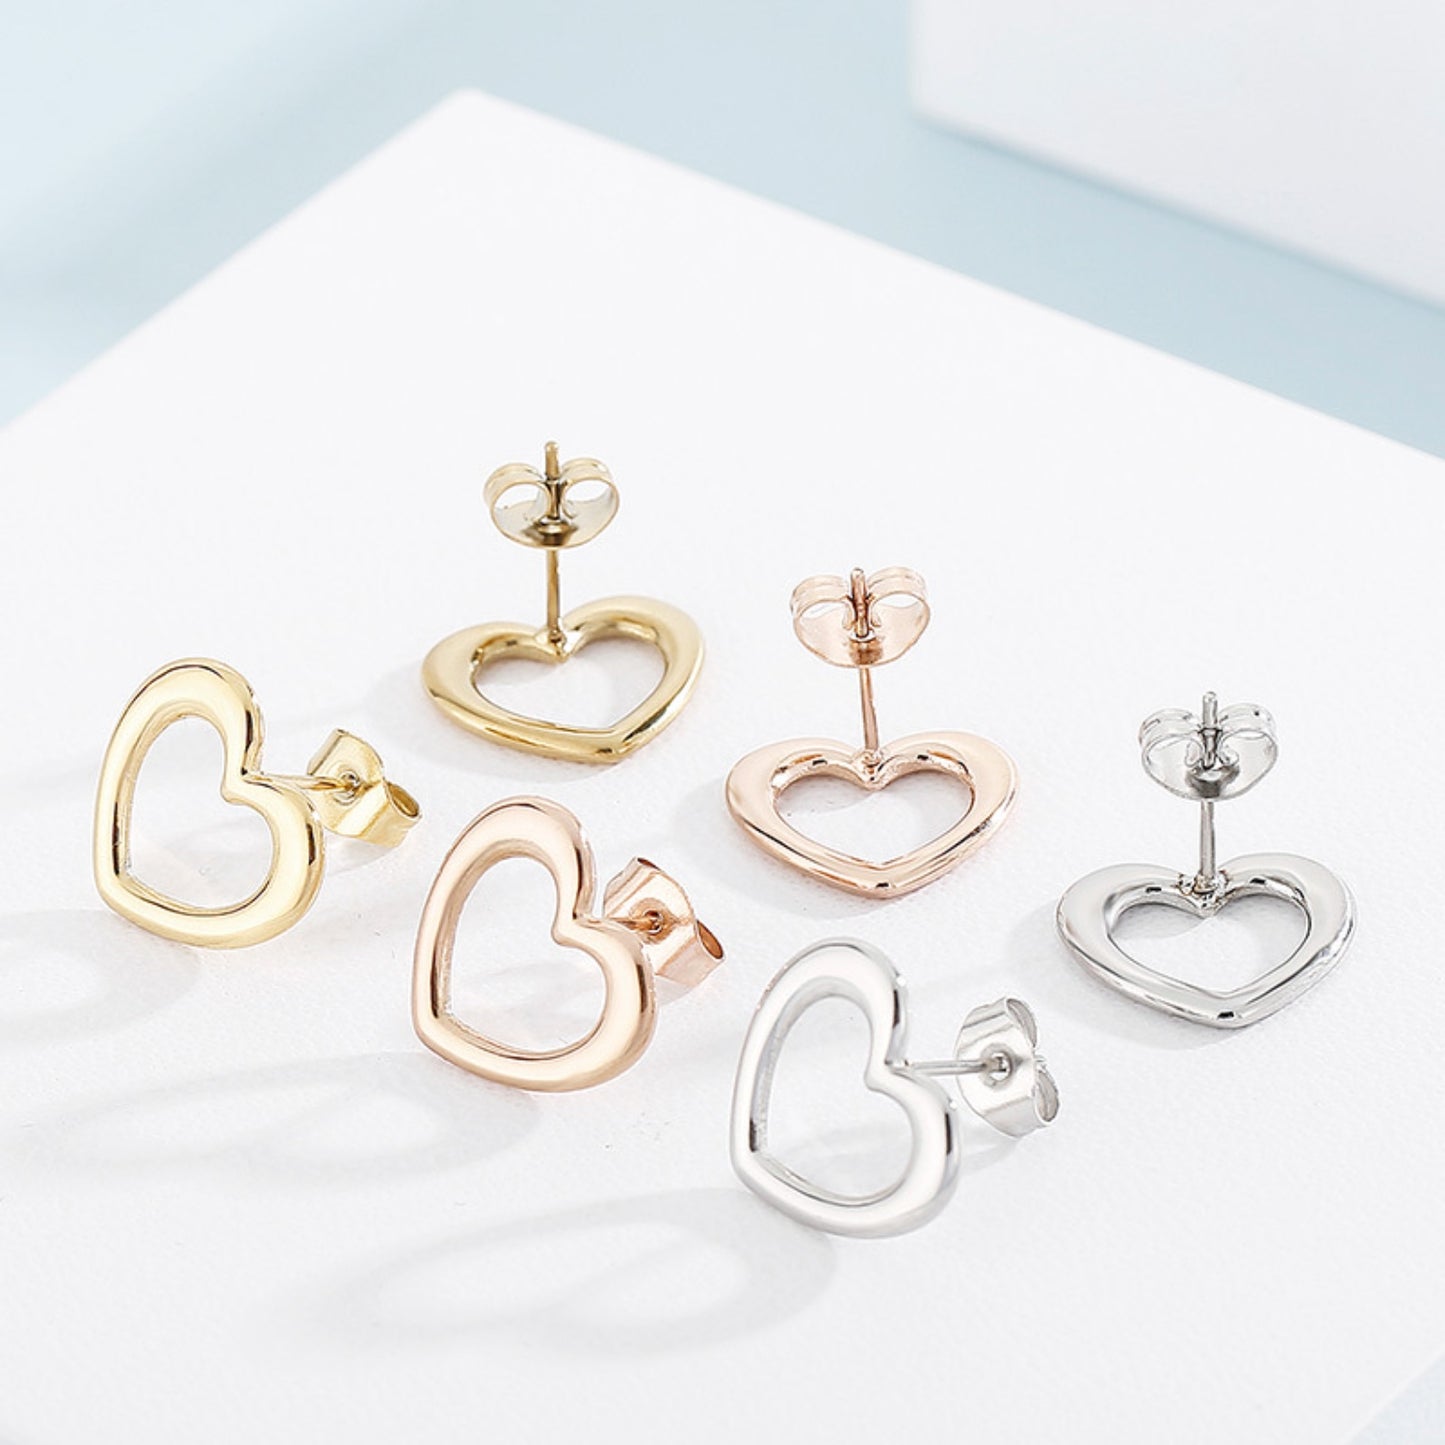 Heart Necklace, Bracelet and Earrings Jewelry Set